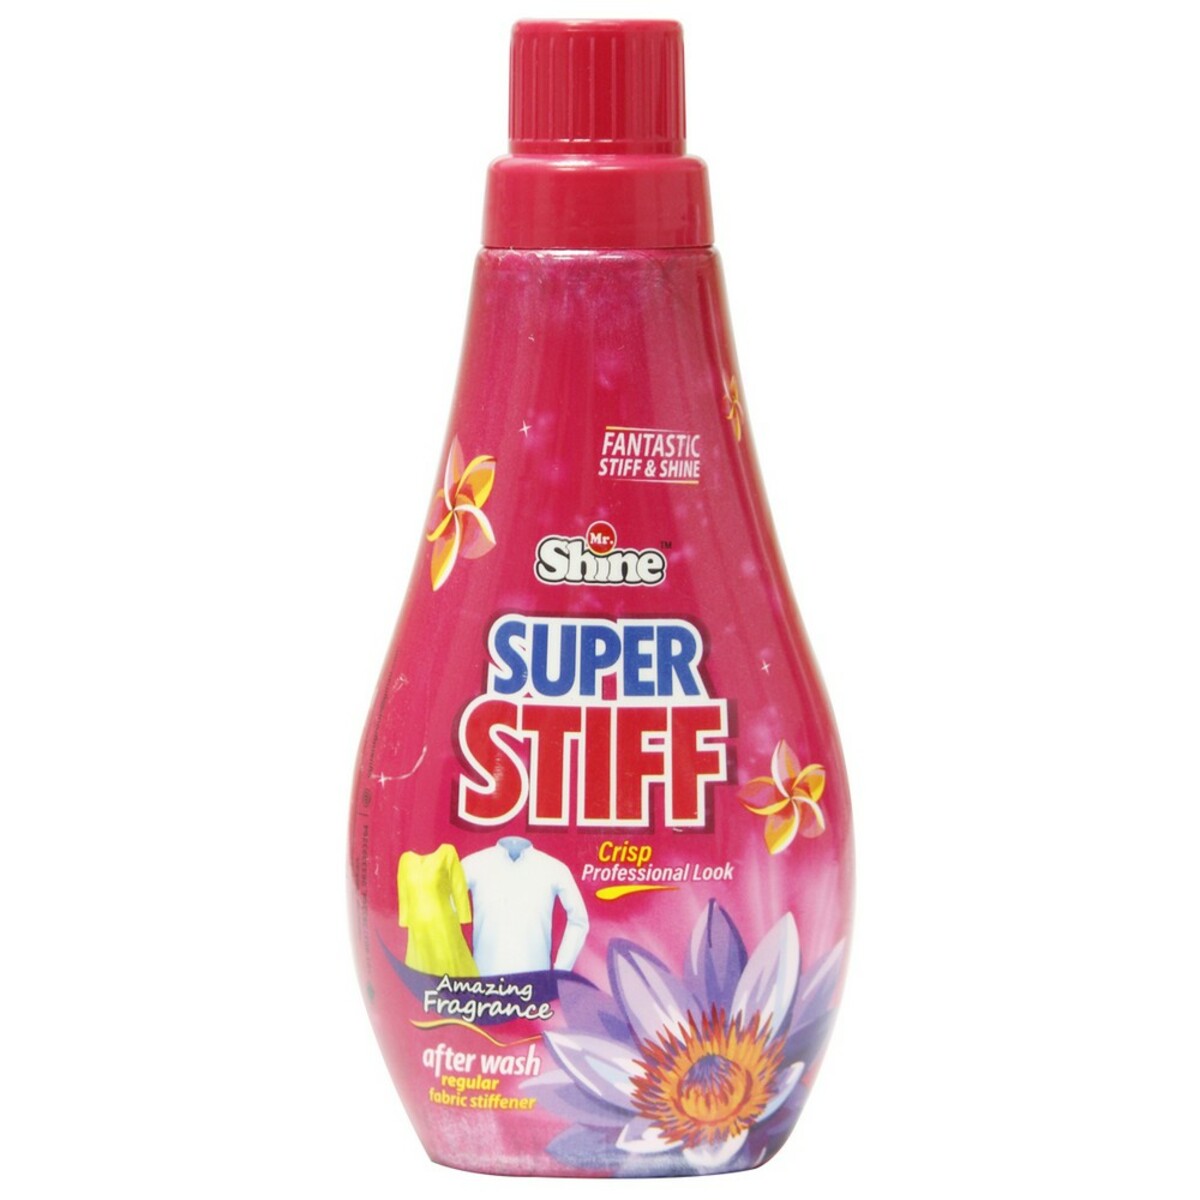 Mr.Shine Super Stiff Regular 500g